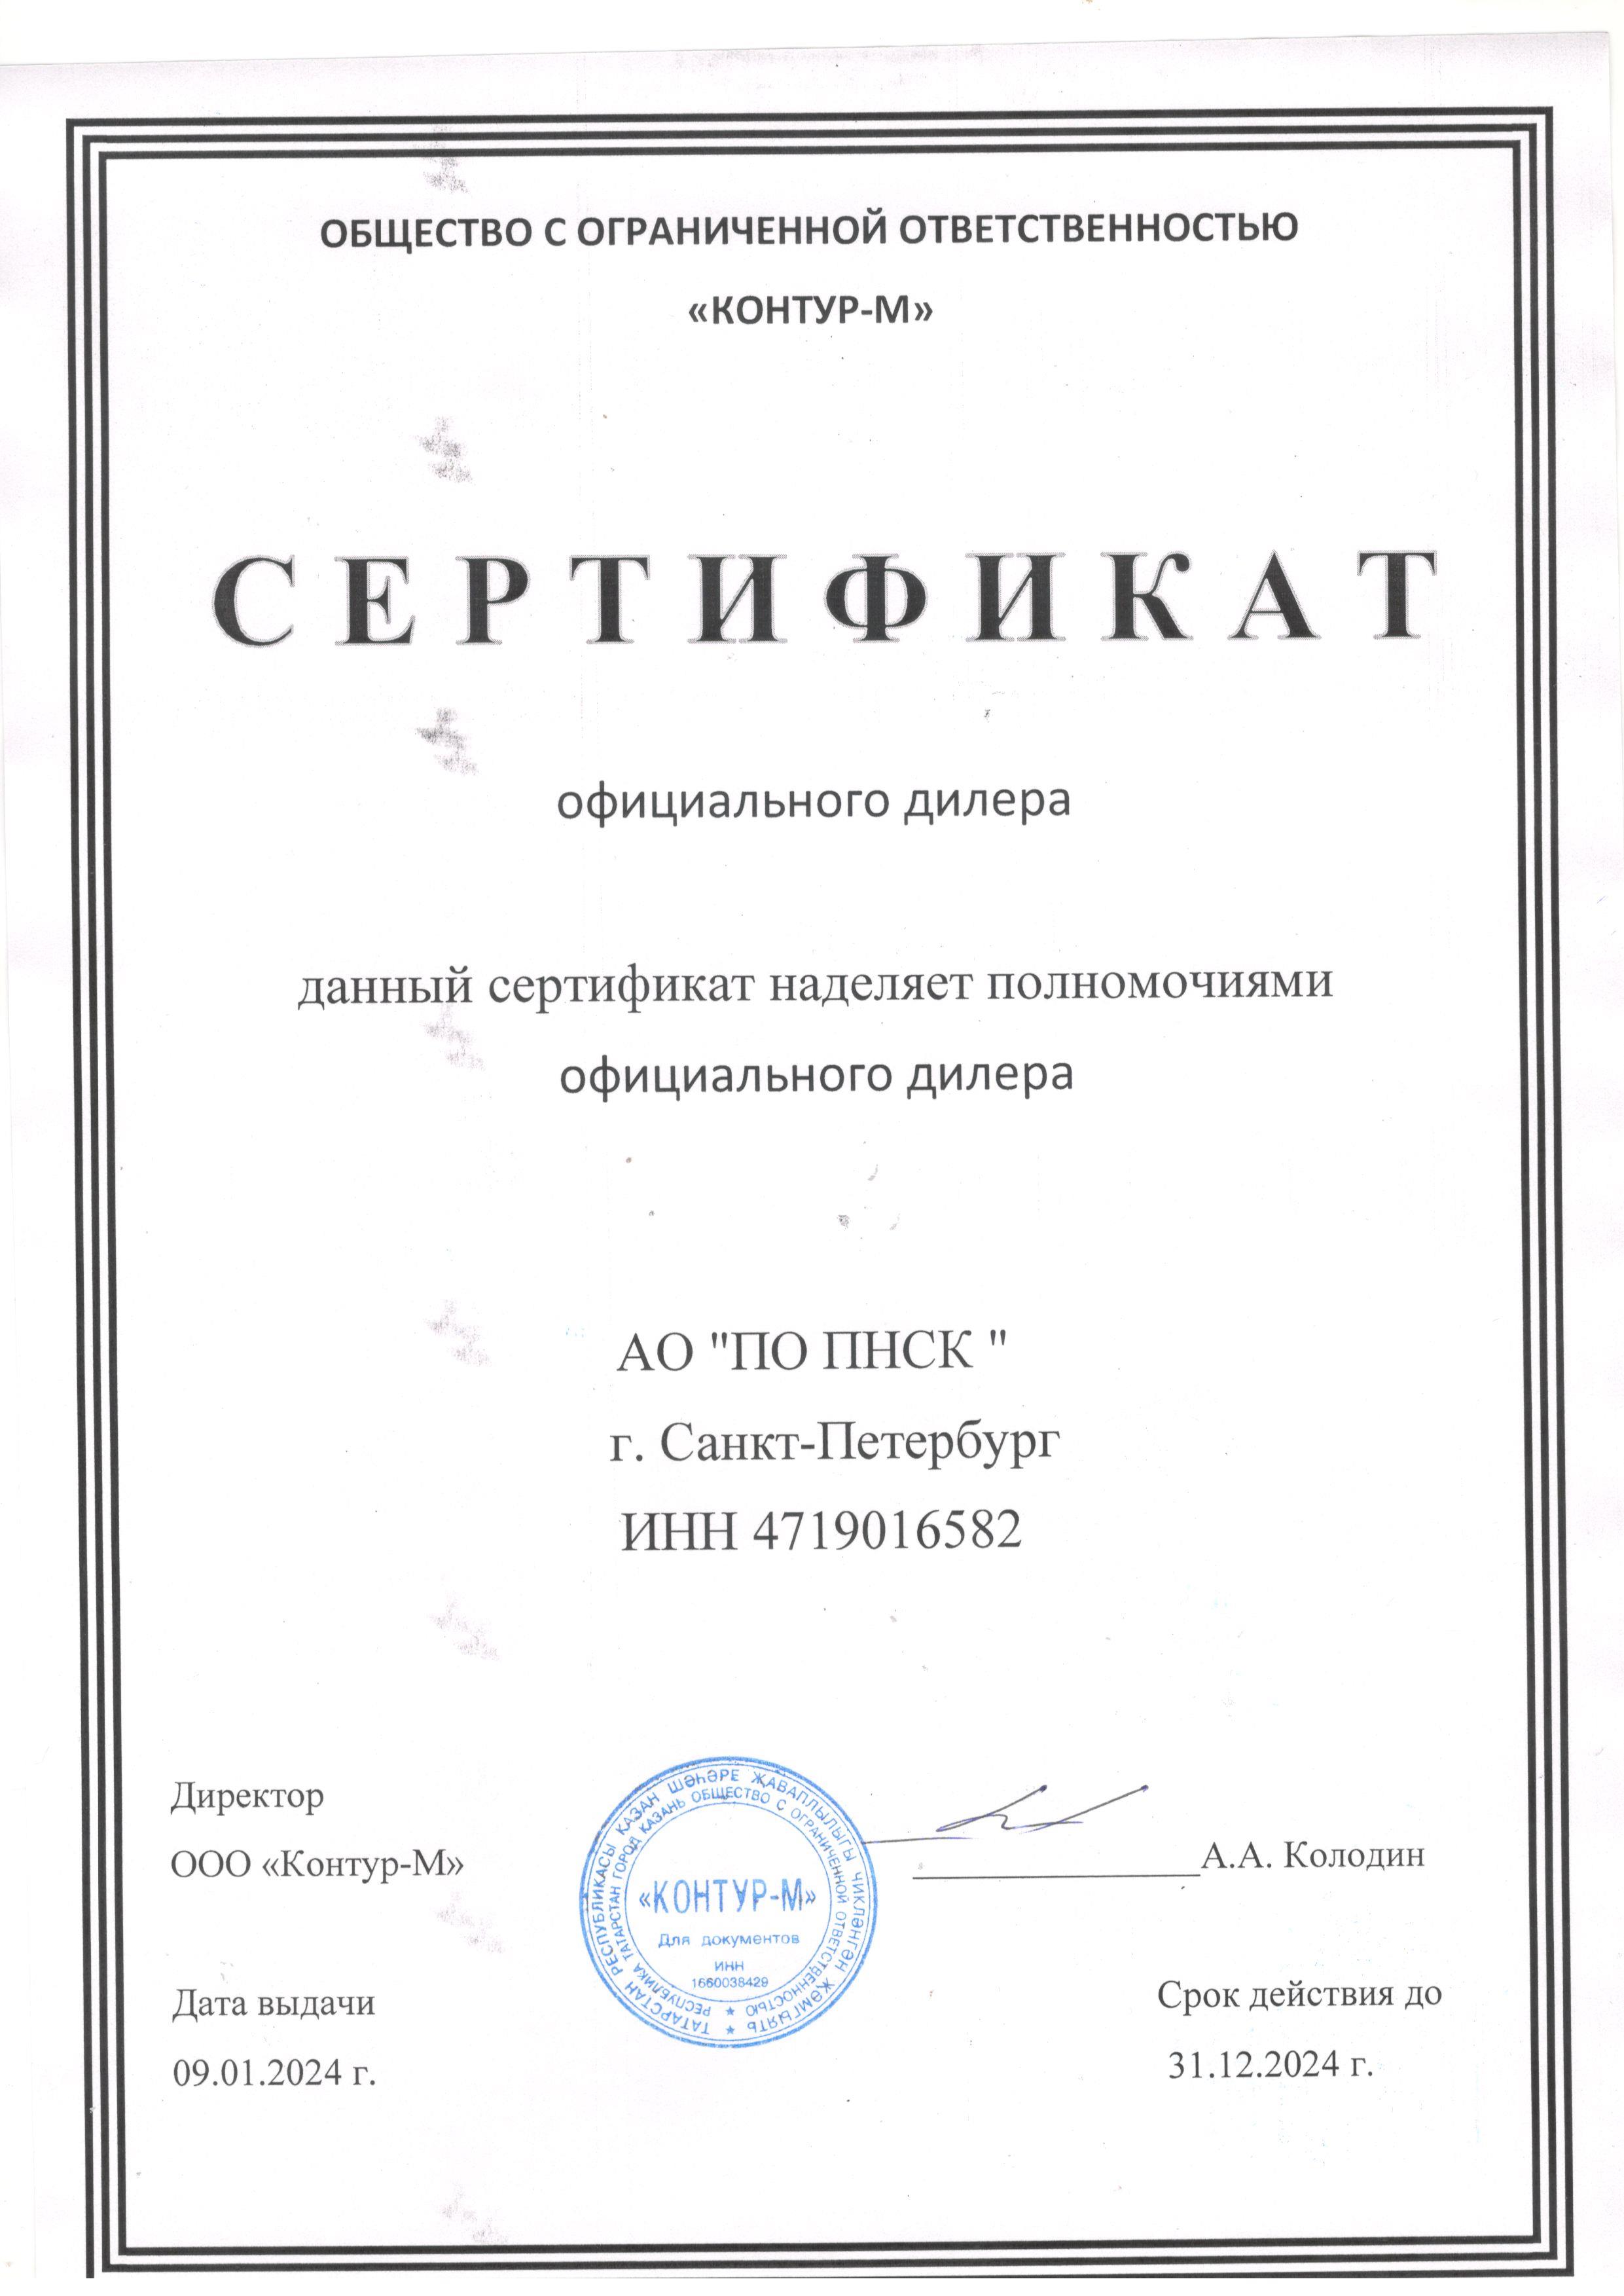 Сертификат дилера ООО «Контур-М»